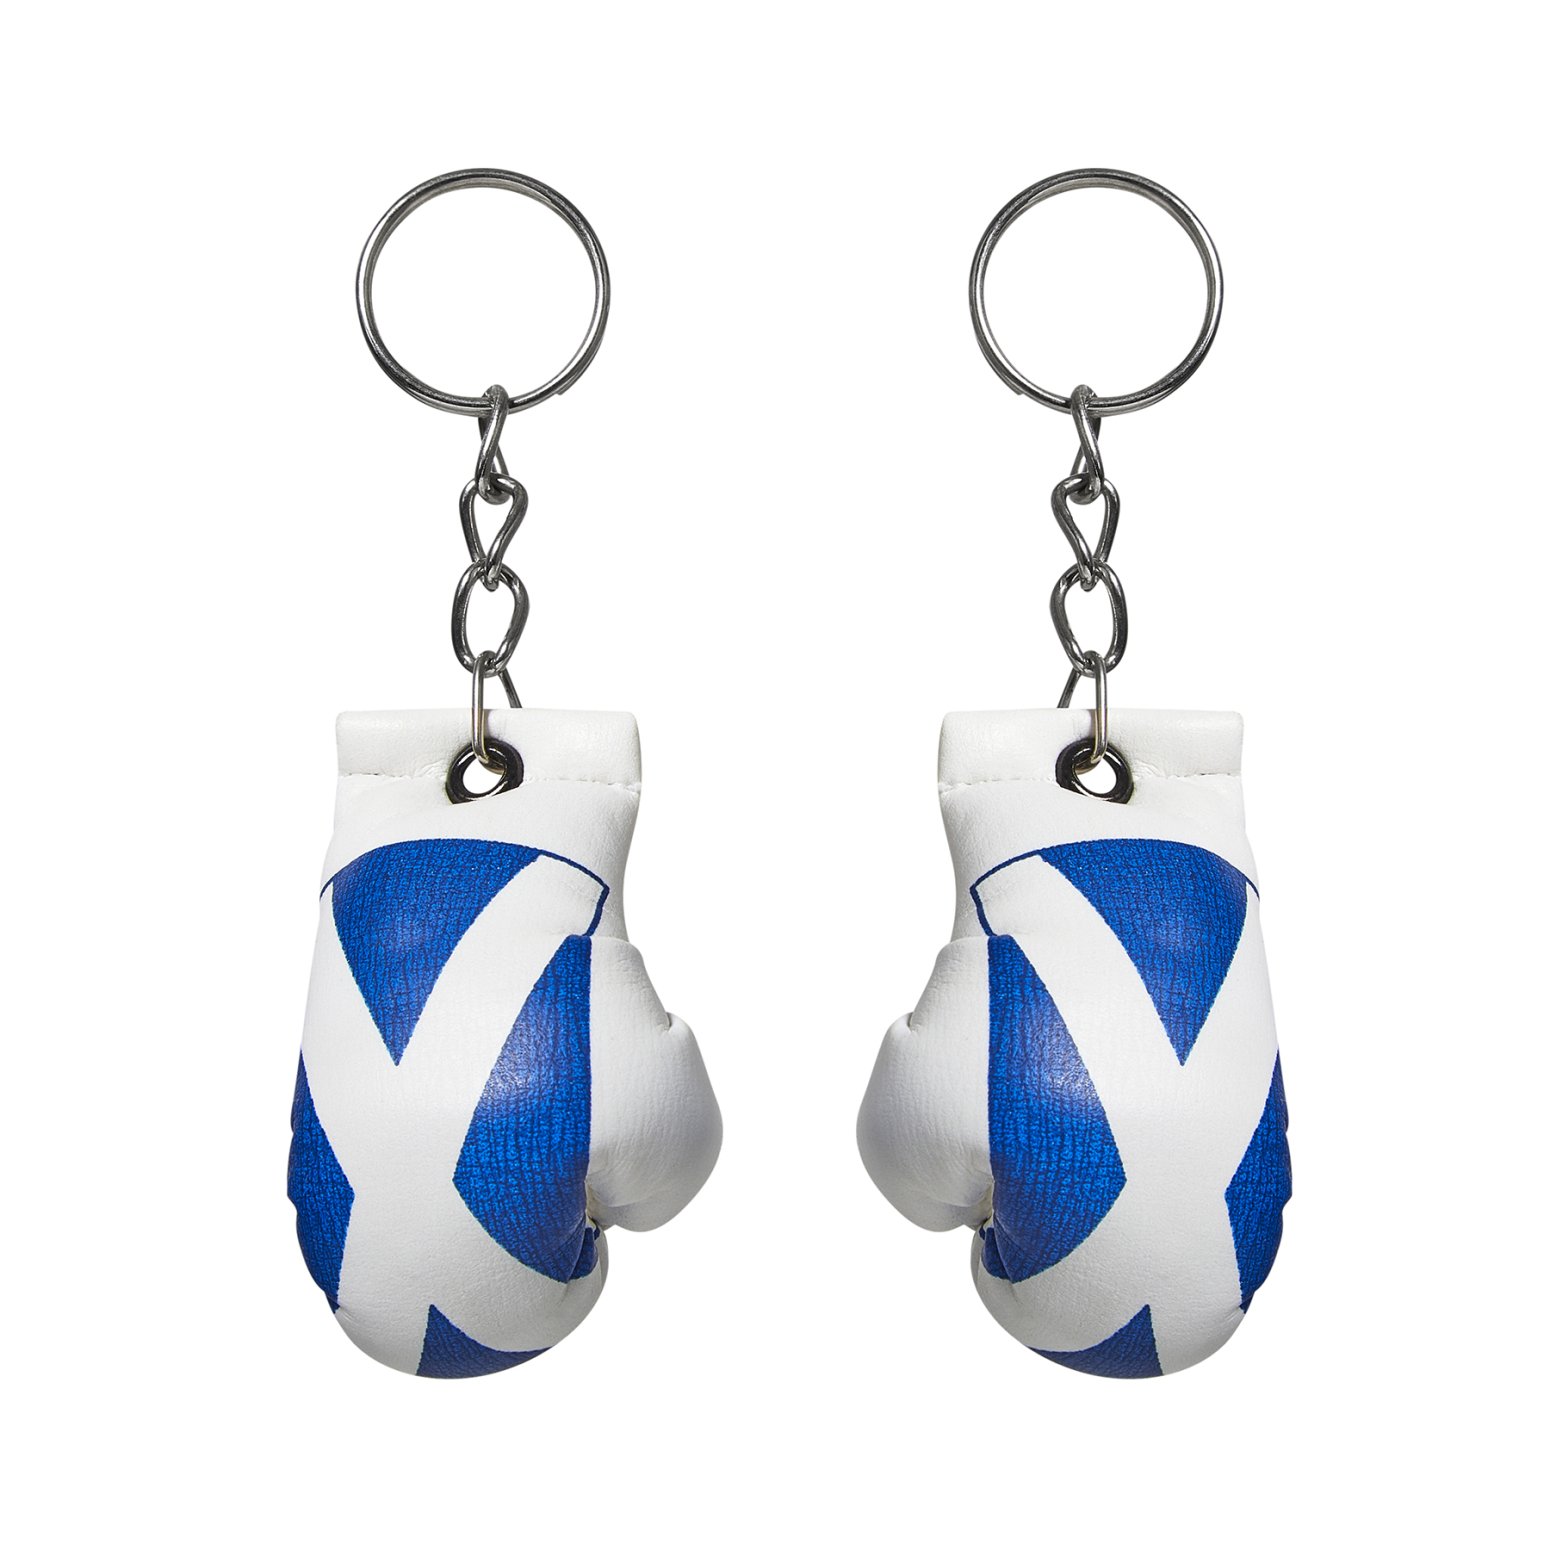 Country Flag Keyrings - Scotland - Click Image to Close